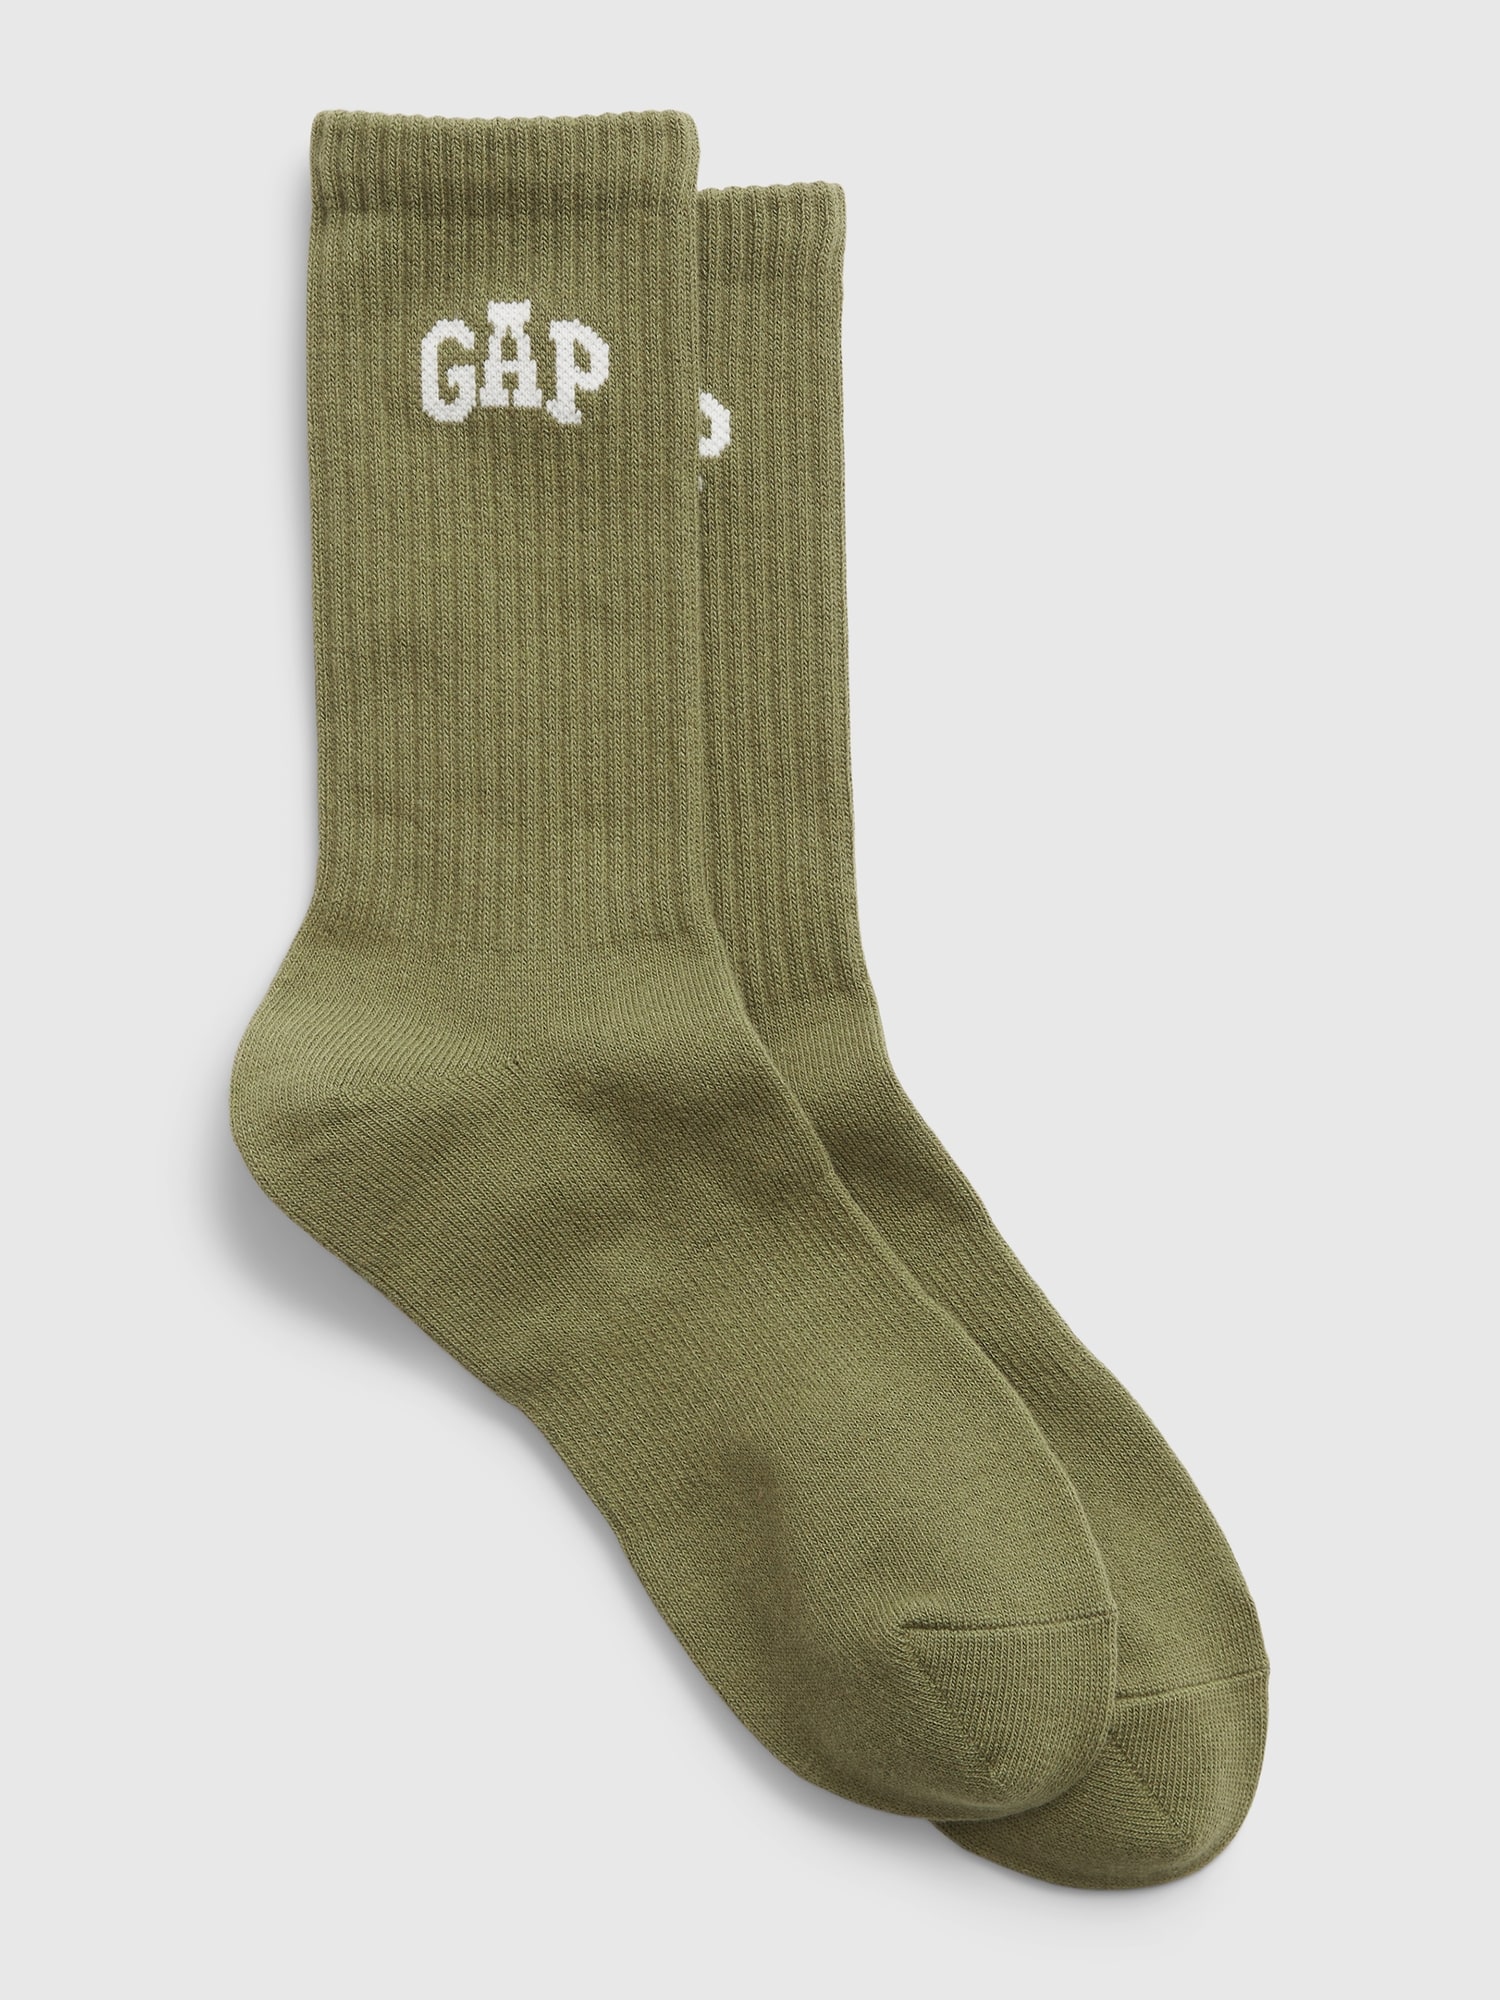 Socks with GAP logo - Men